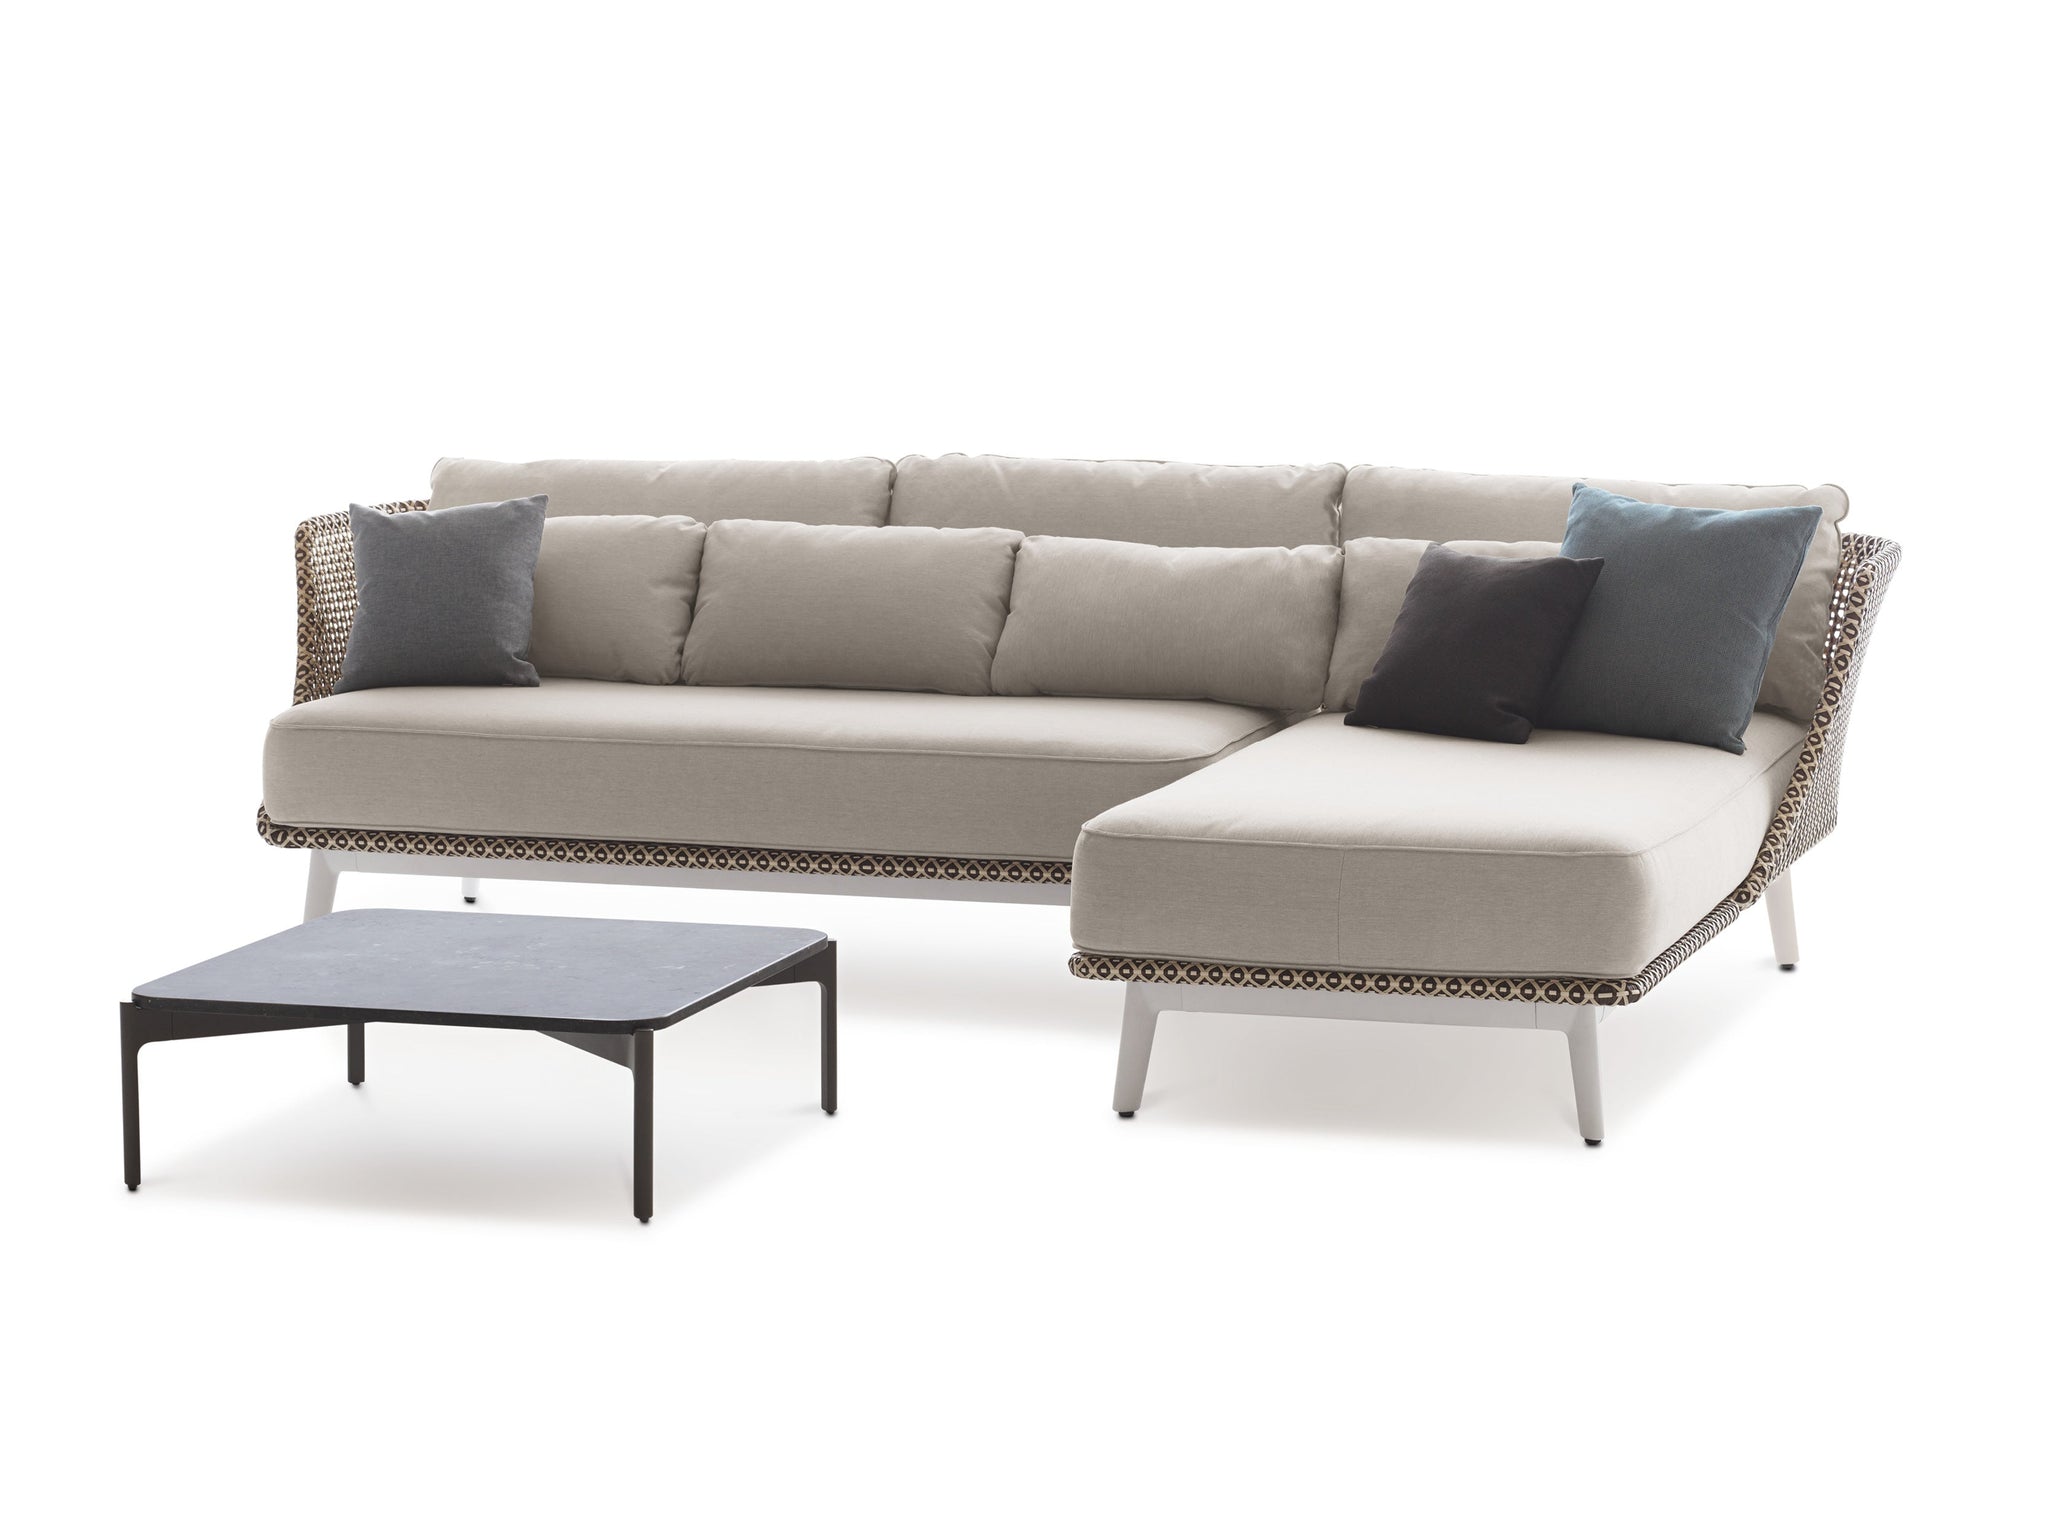 Mbarq modular sofa clearance item